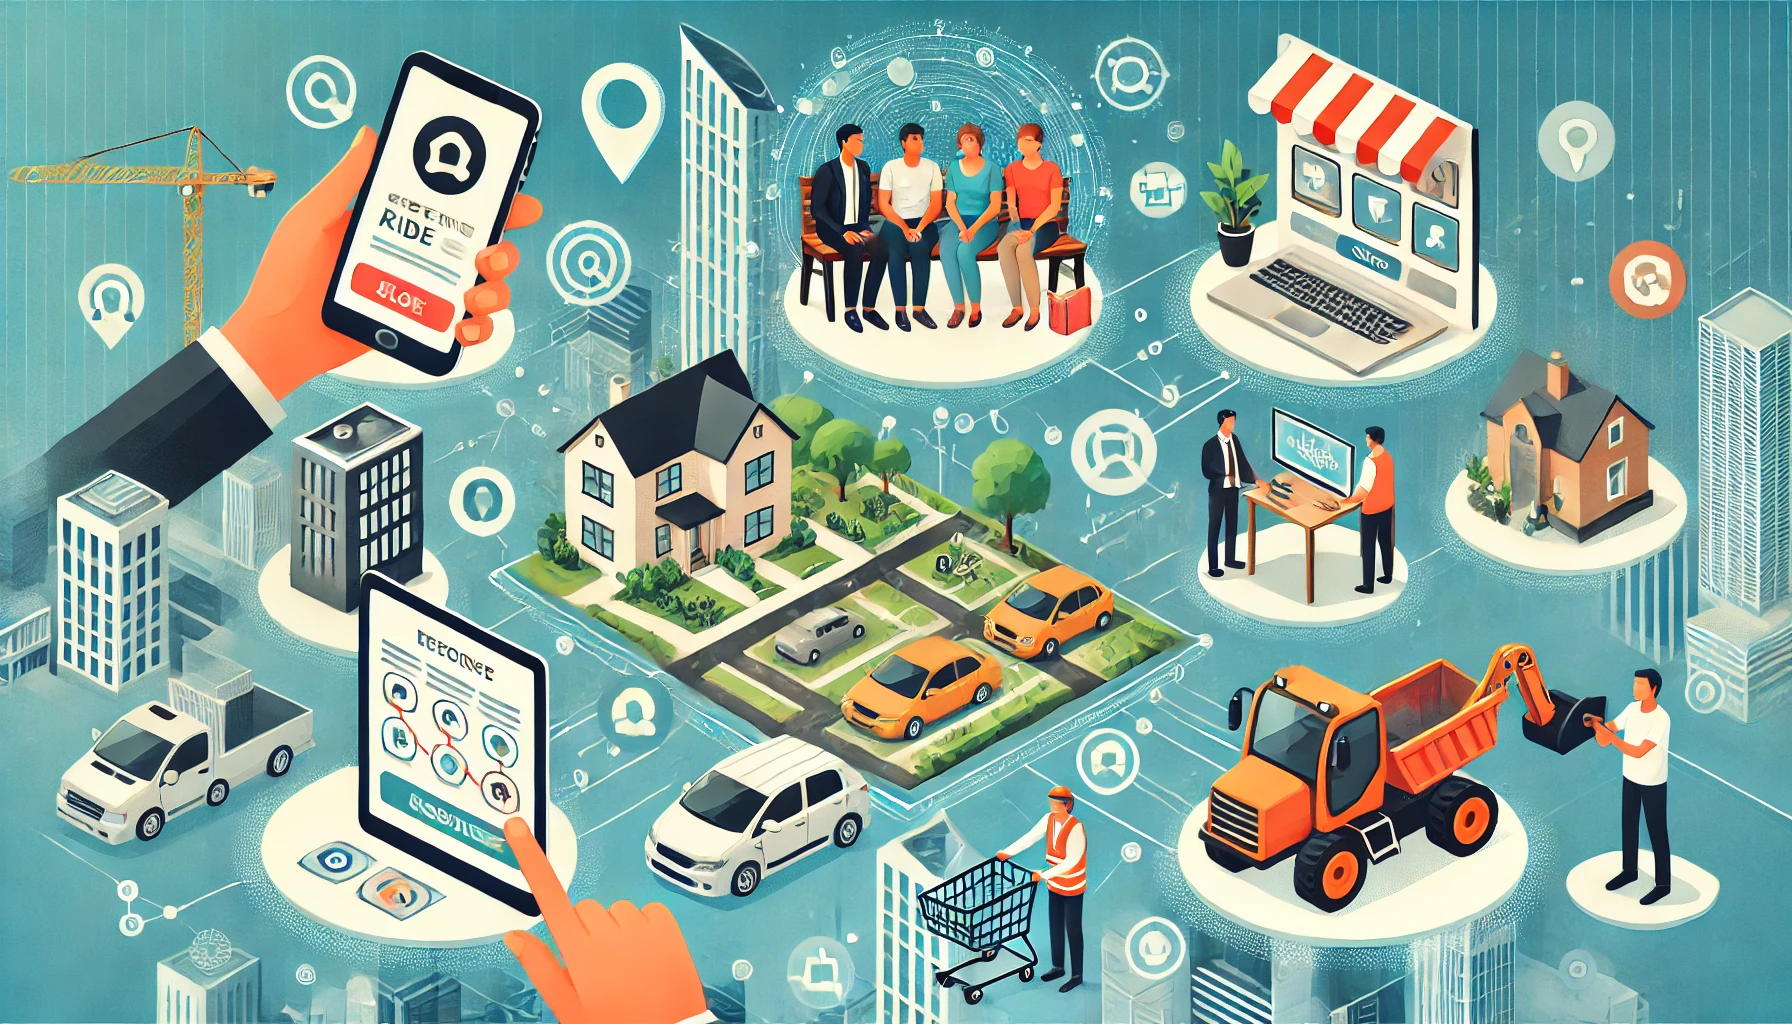 Collage illustrating the sharing economy elements